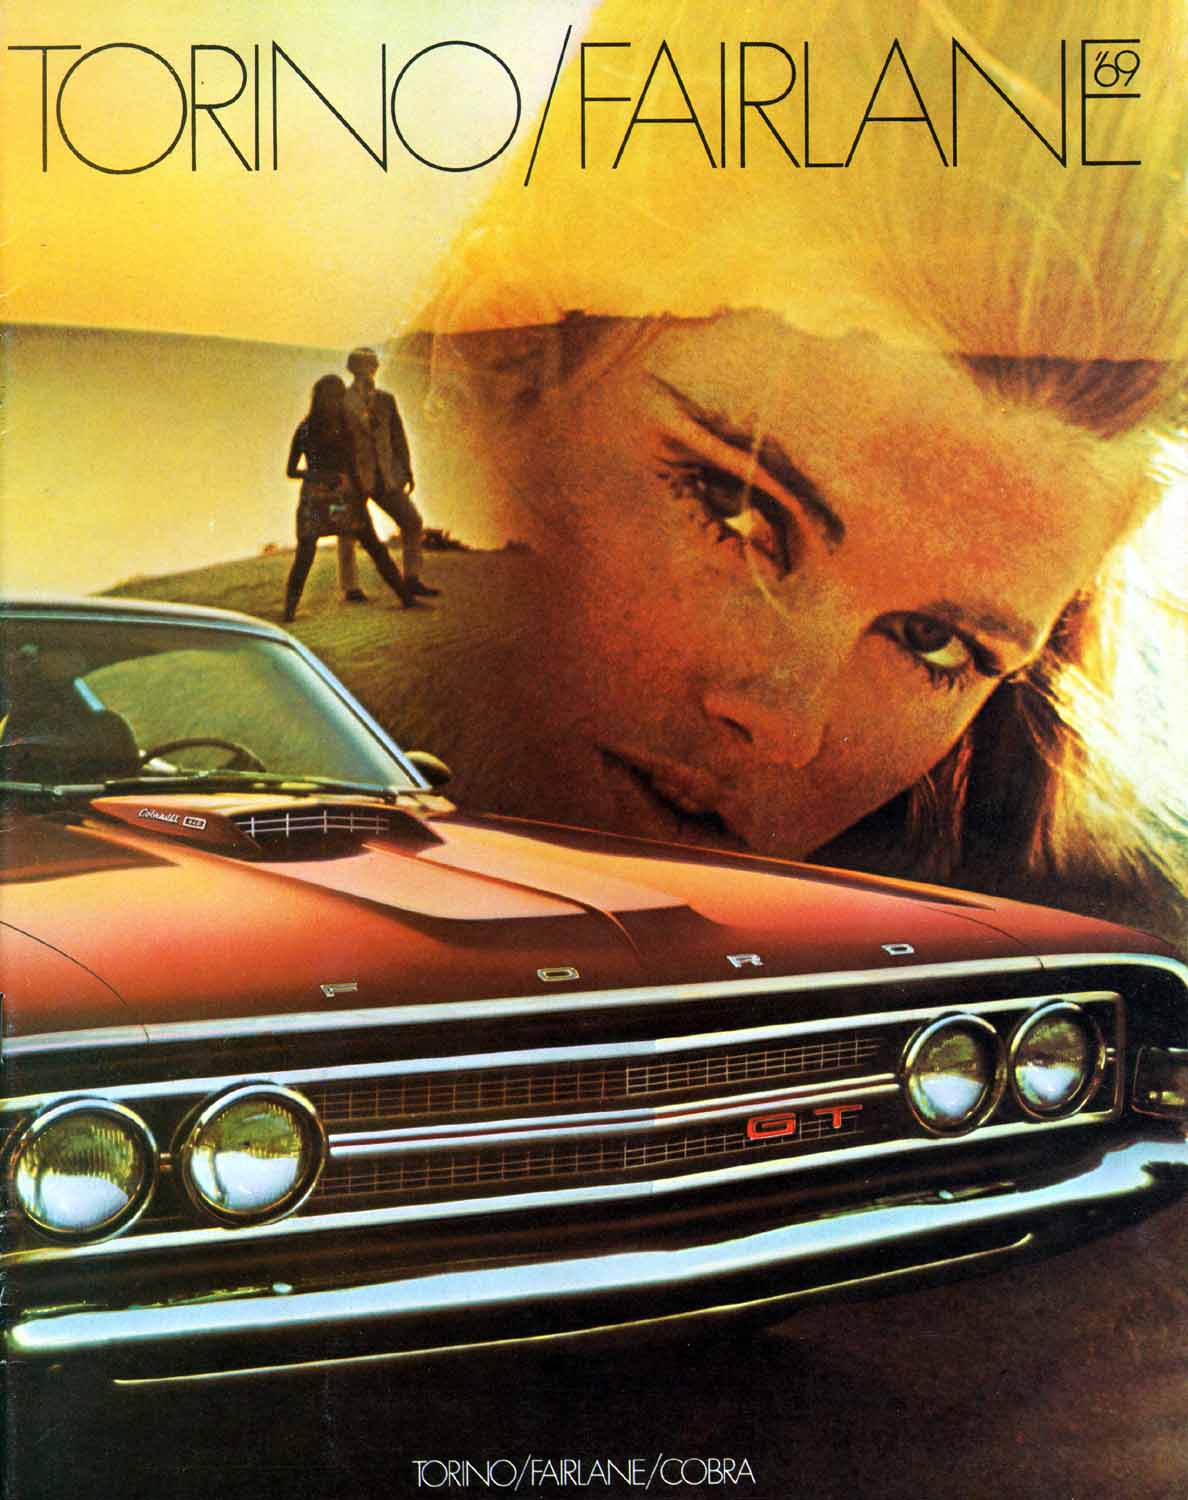 1969 Ford Torino and Fairlane Brochure